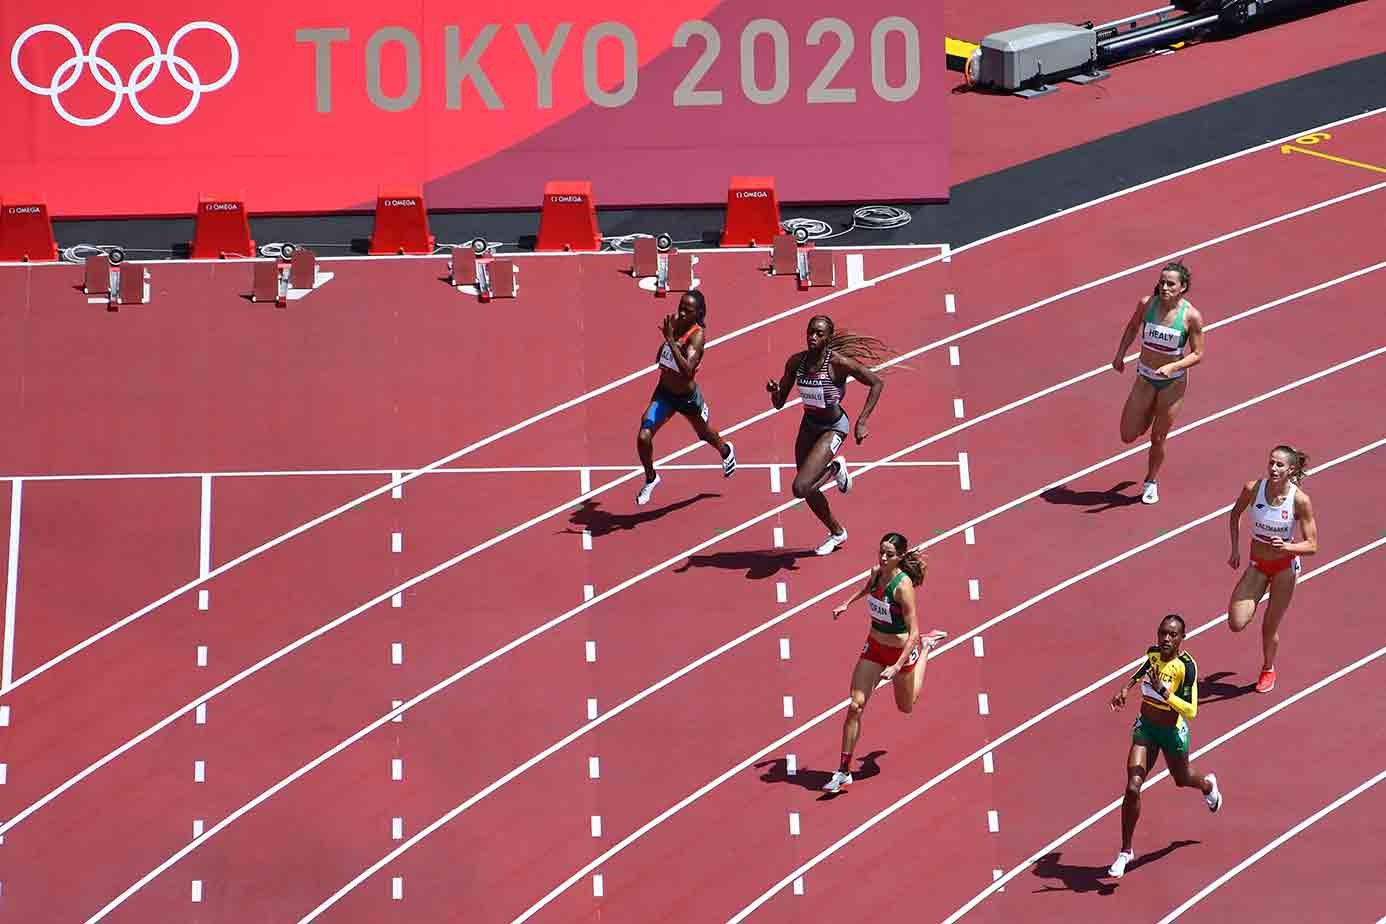 Paola Morán atleta destacada de Borregos Tec logró su pase a semifinales de 400 metros planos en Tokio 2020.